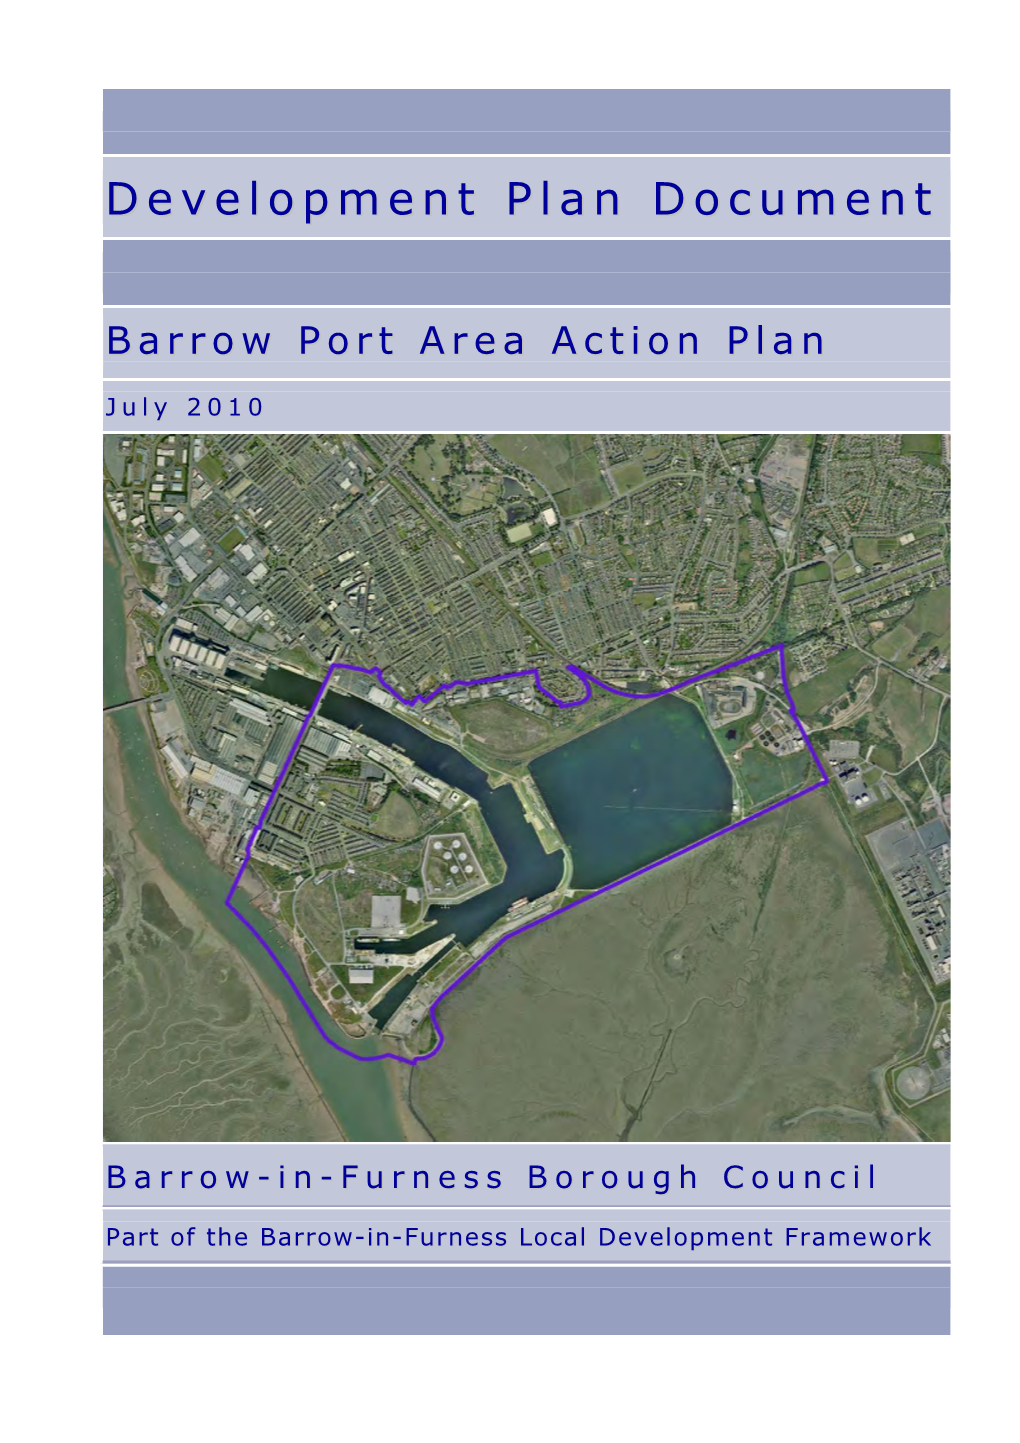 LD169 Barrow Port Area Action Plan July 2010